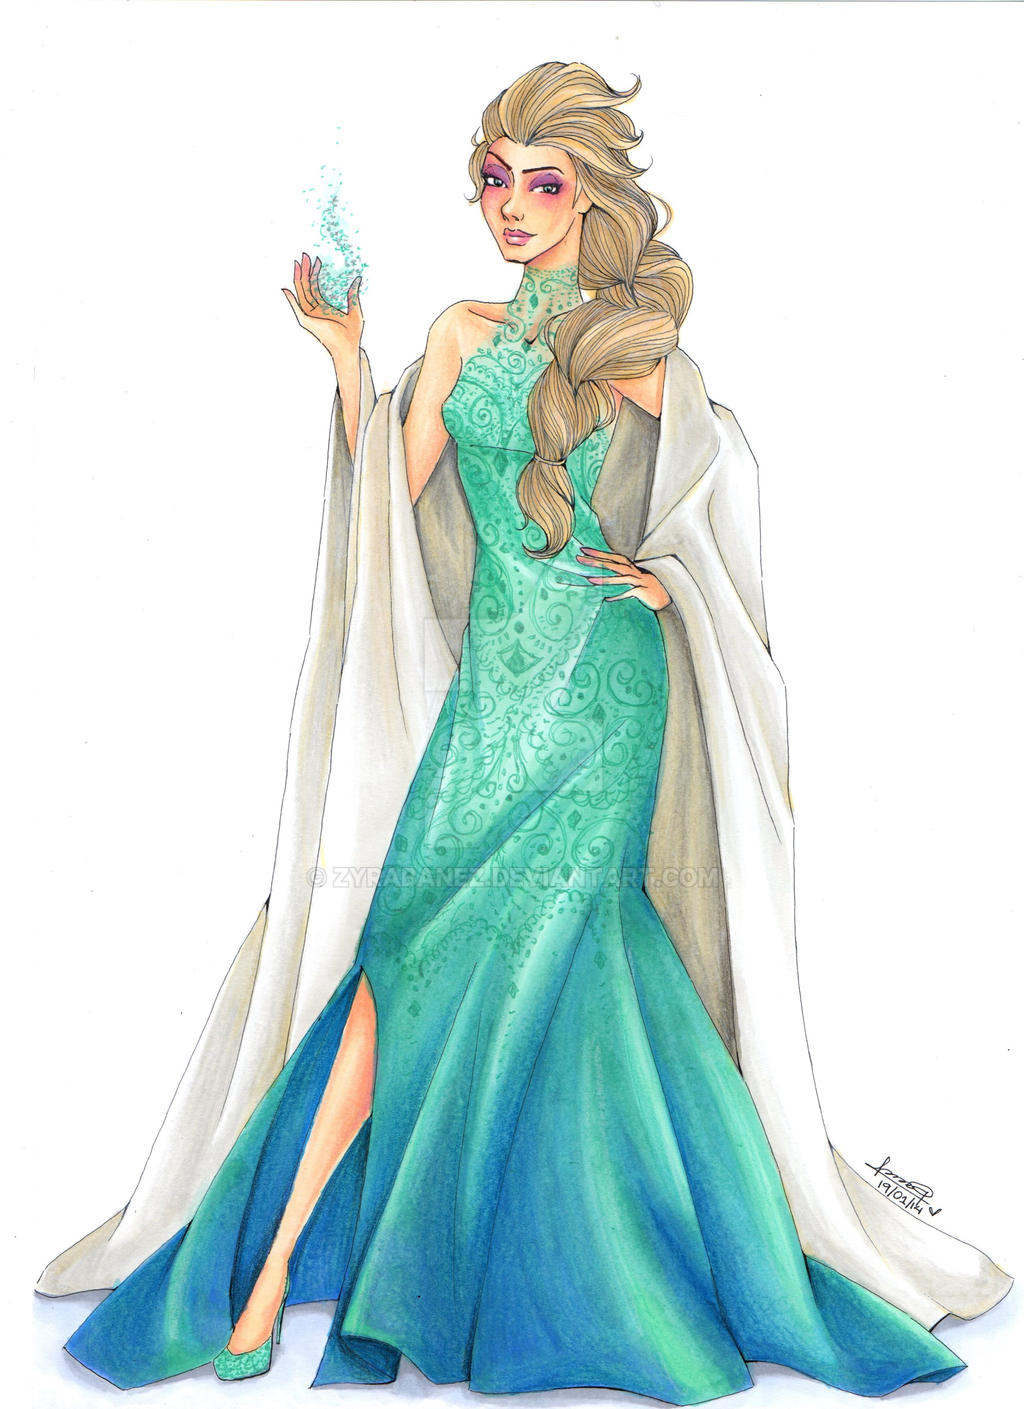 Fashion Illustration Elsa by zyrabanez on DeviantArt